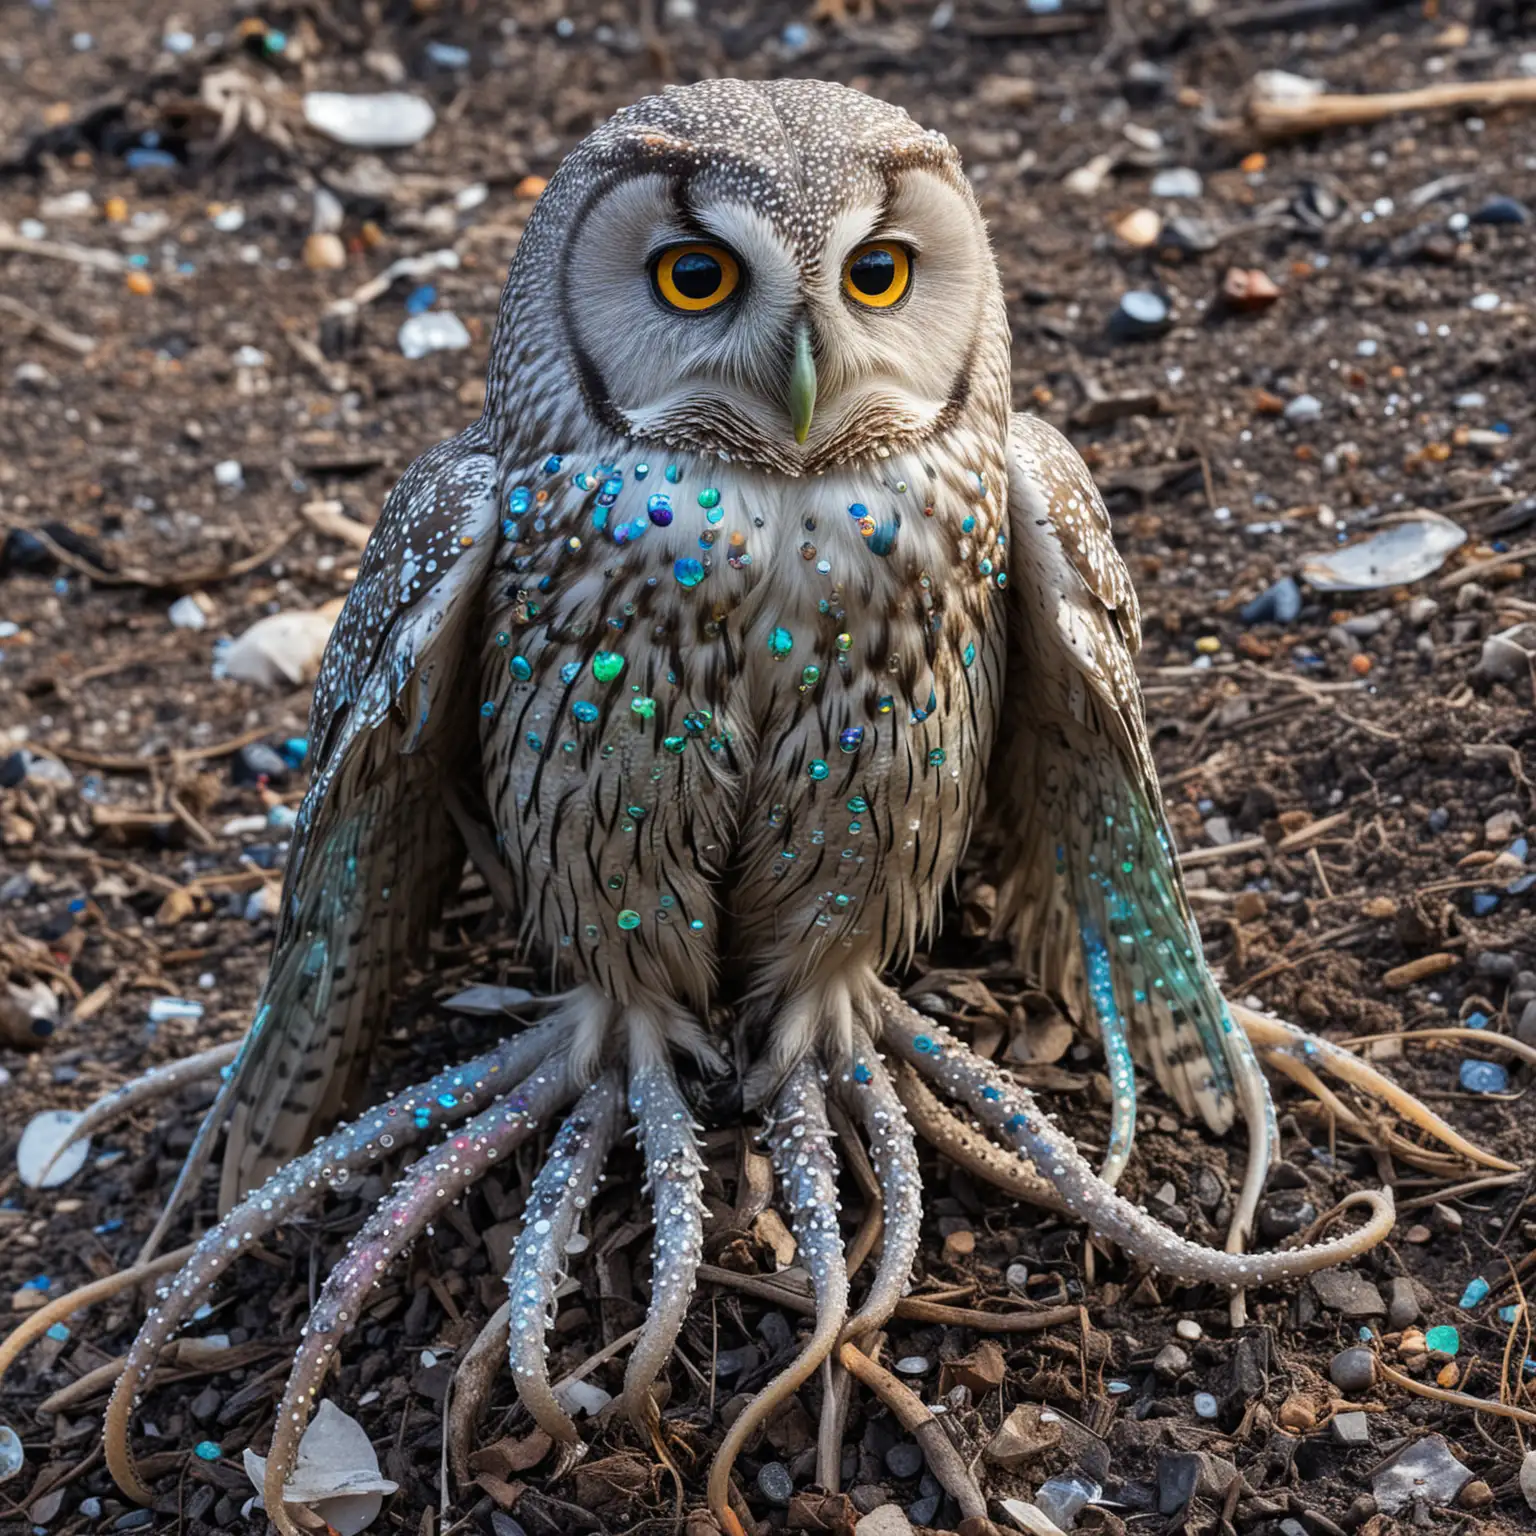 Iridescent Tentacled Owl Amidst Garbage Dump Landscape